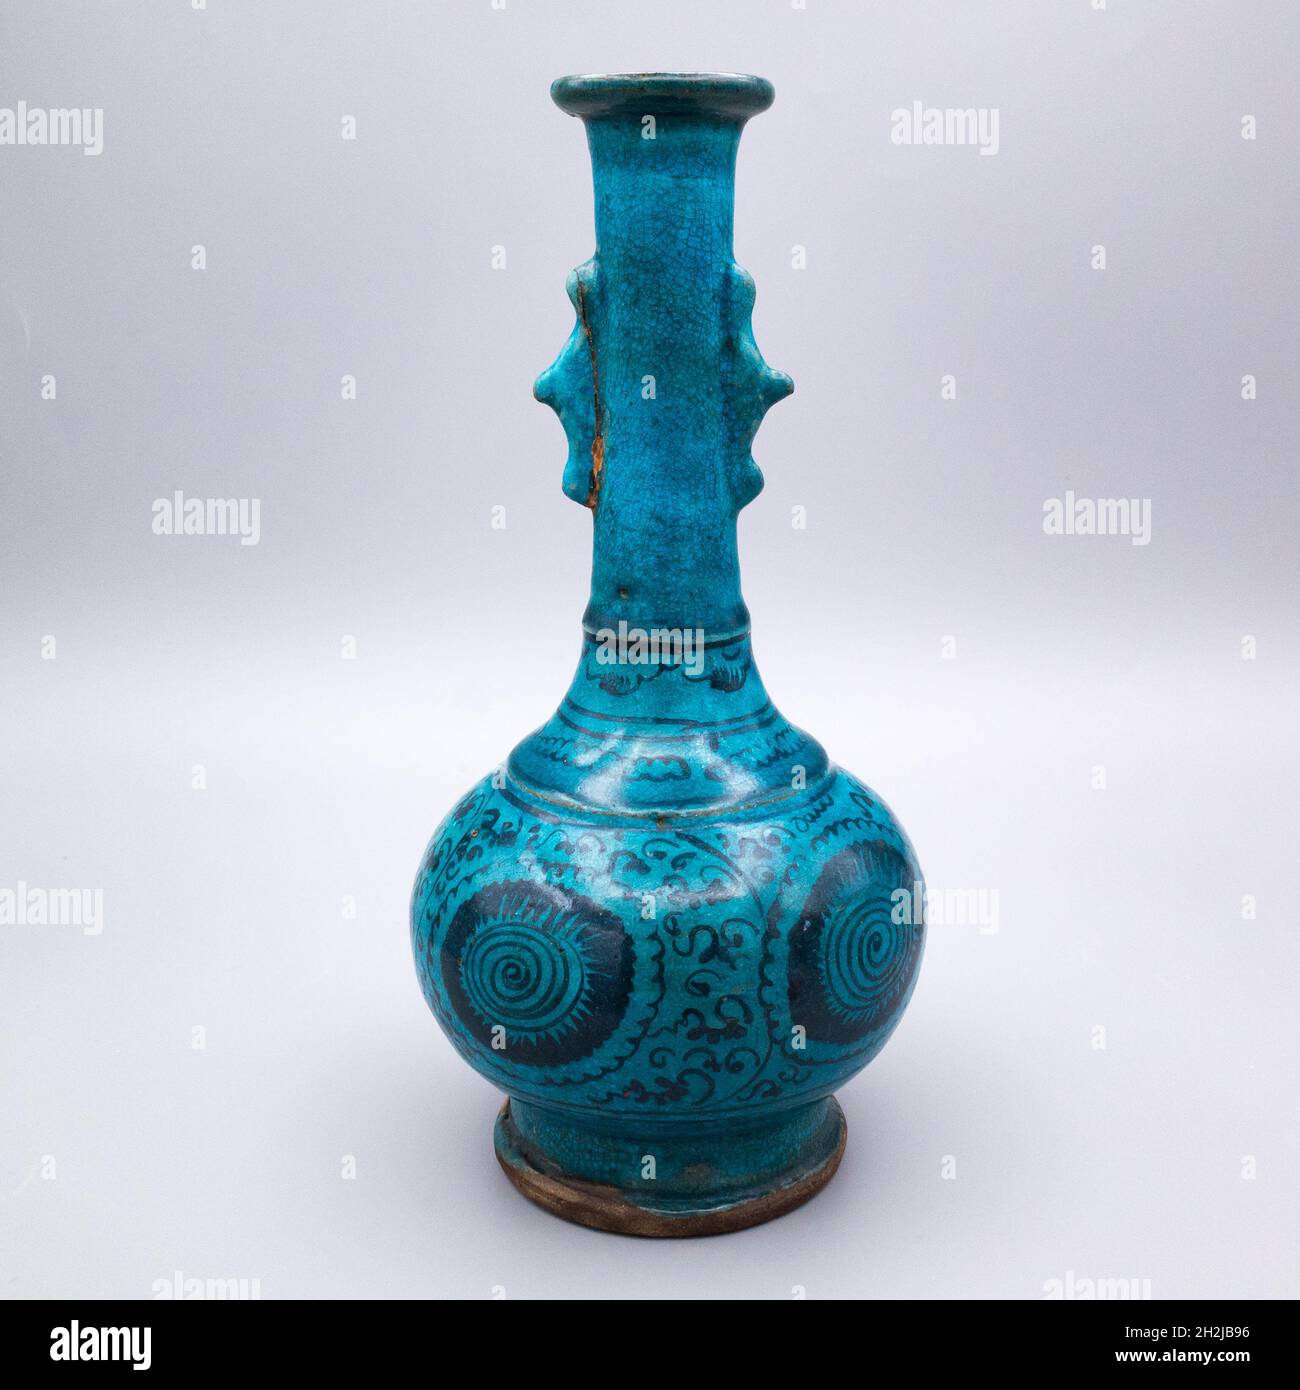 Antique Middle Eastern Turquoise Glazed Bottle Vase. Iran, 16th-18th century Stock Photo